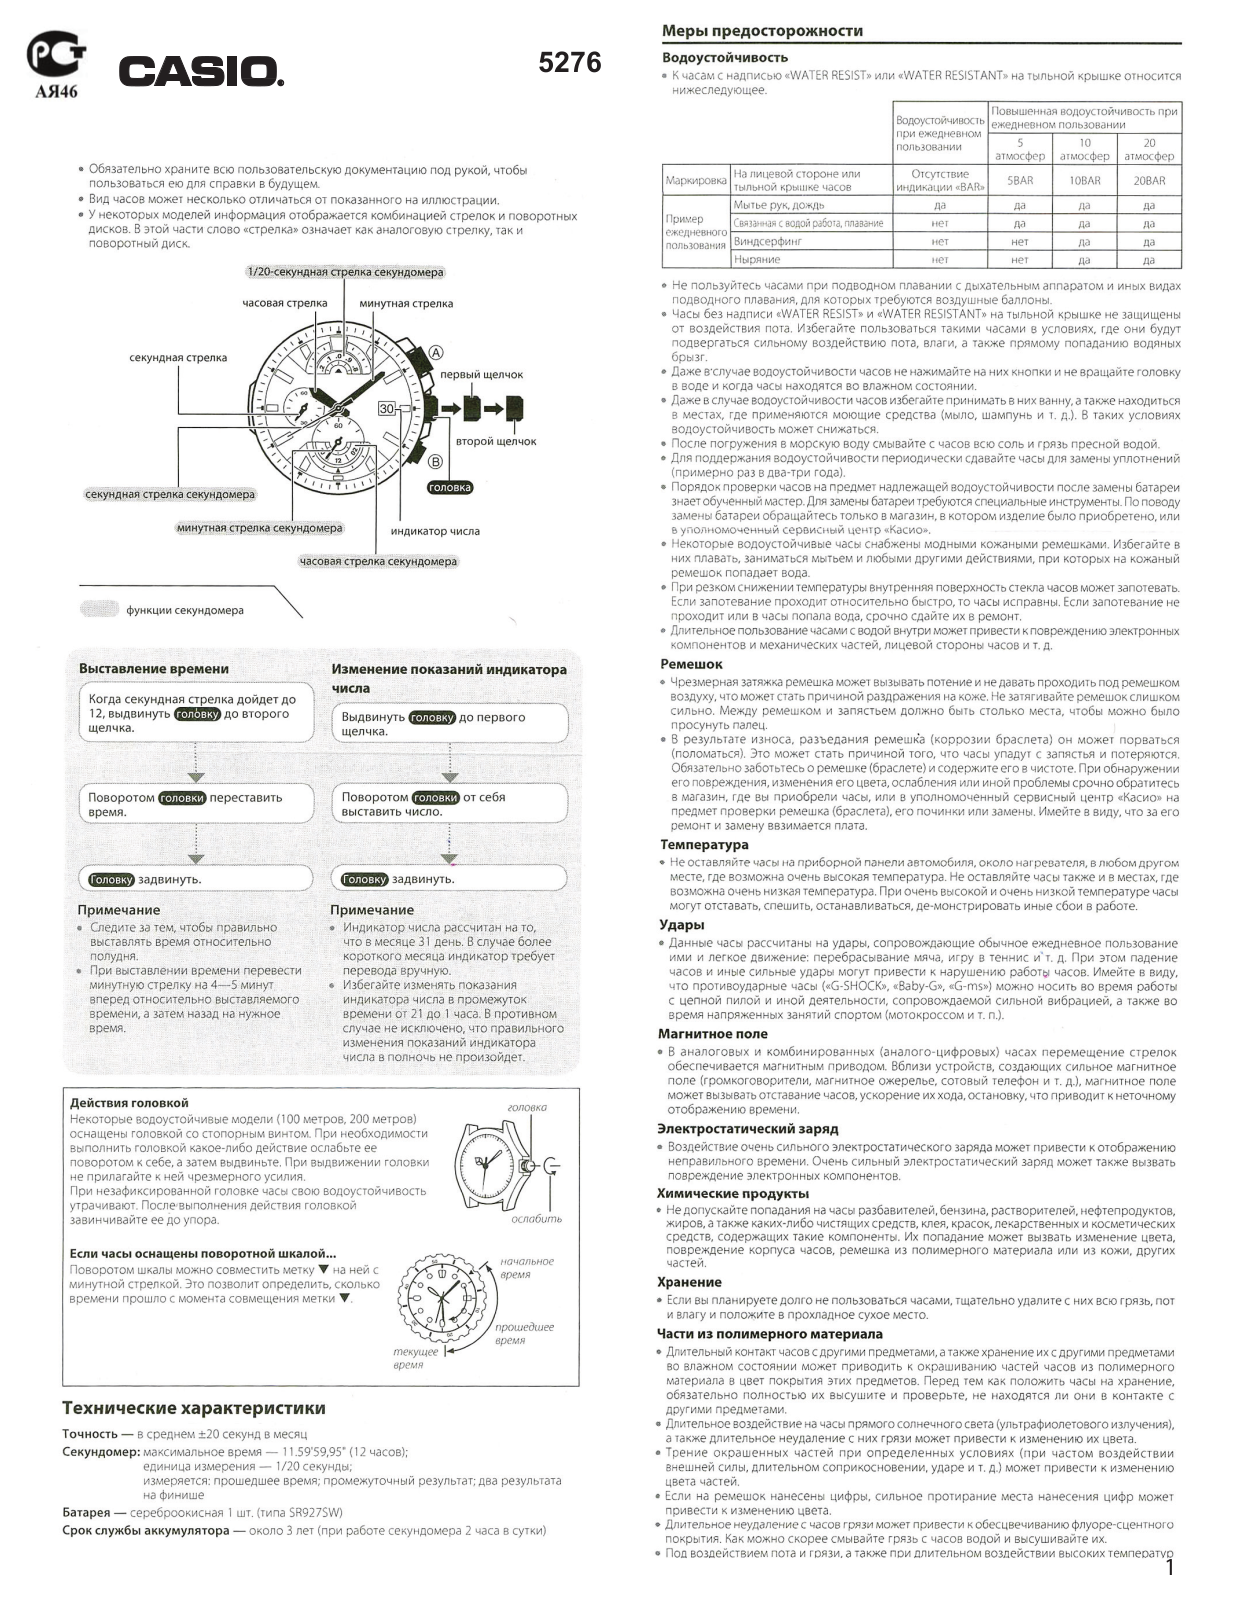 Casio EFR-540RBP-1A User Manual